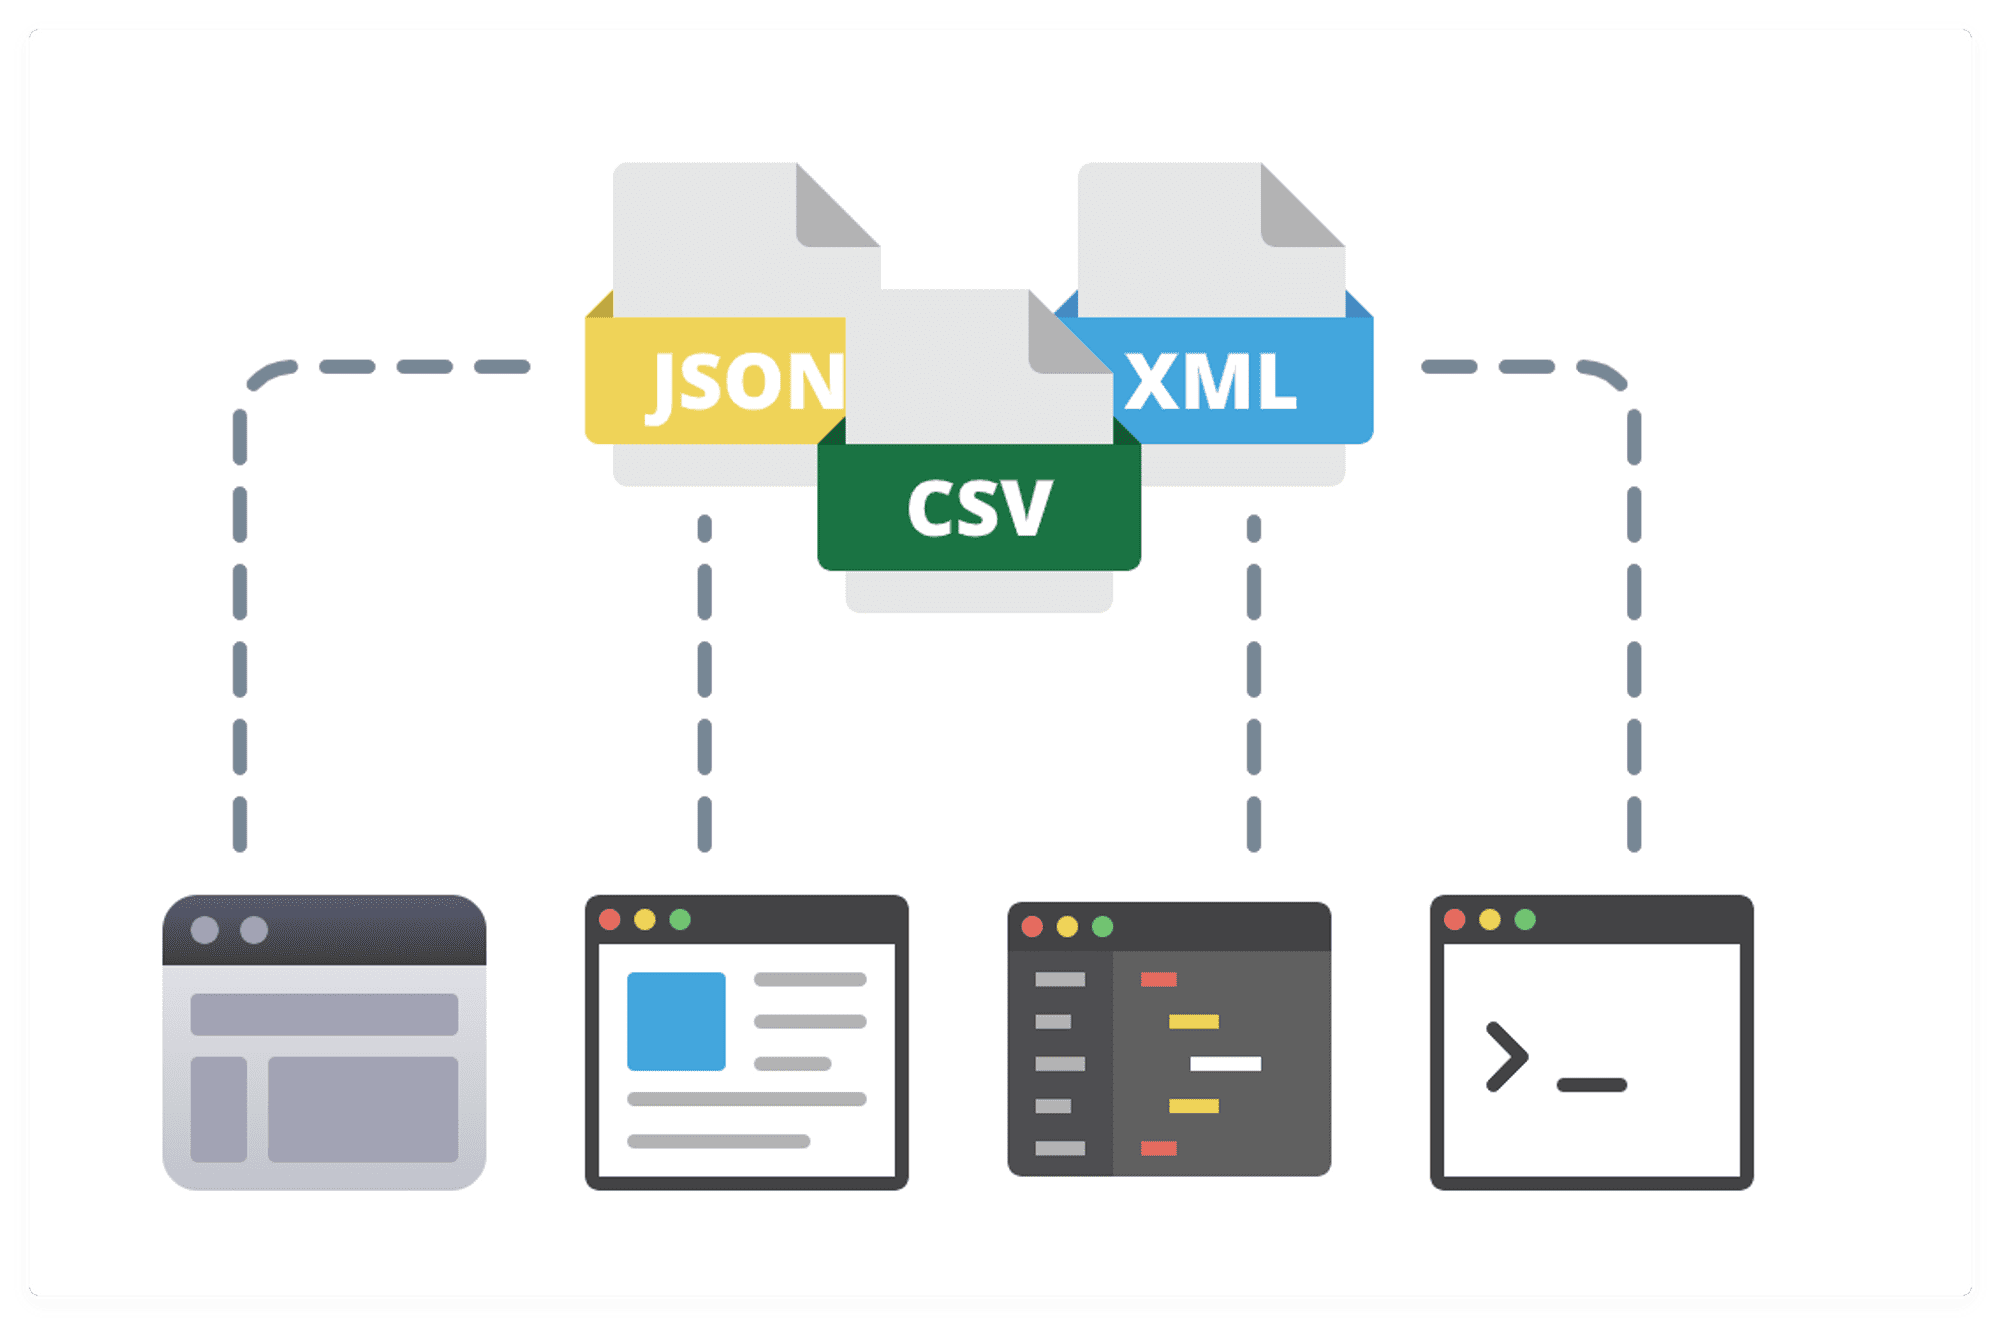 Extracted data: JSON, CSV, XML